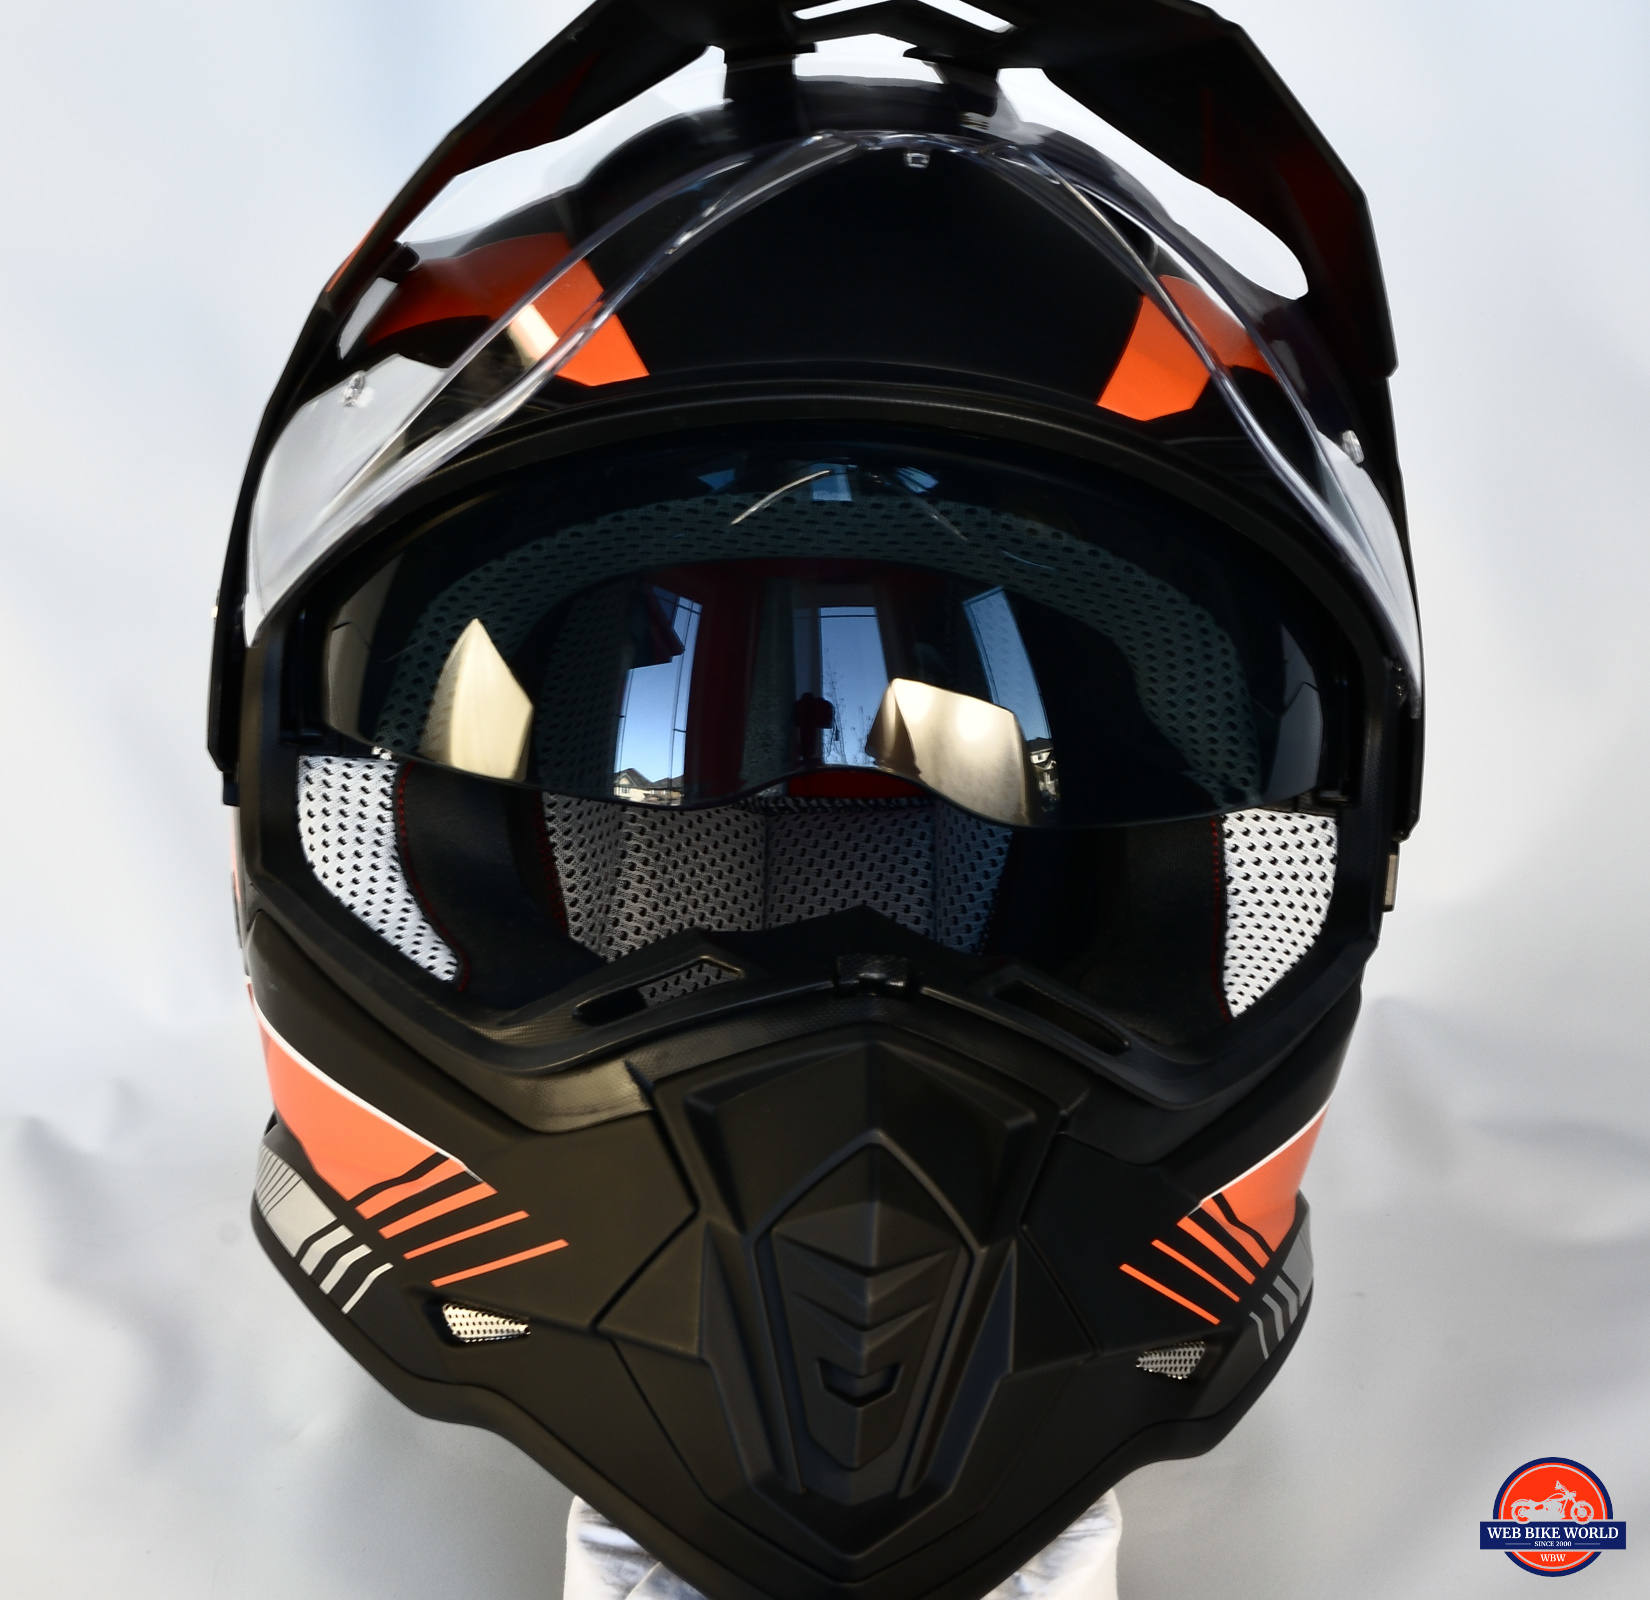 Vemar Kona Graphic Helmet Hands On Review | webBikeWorld